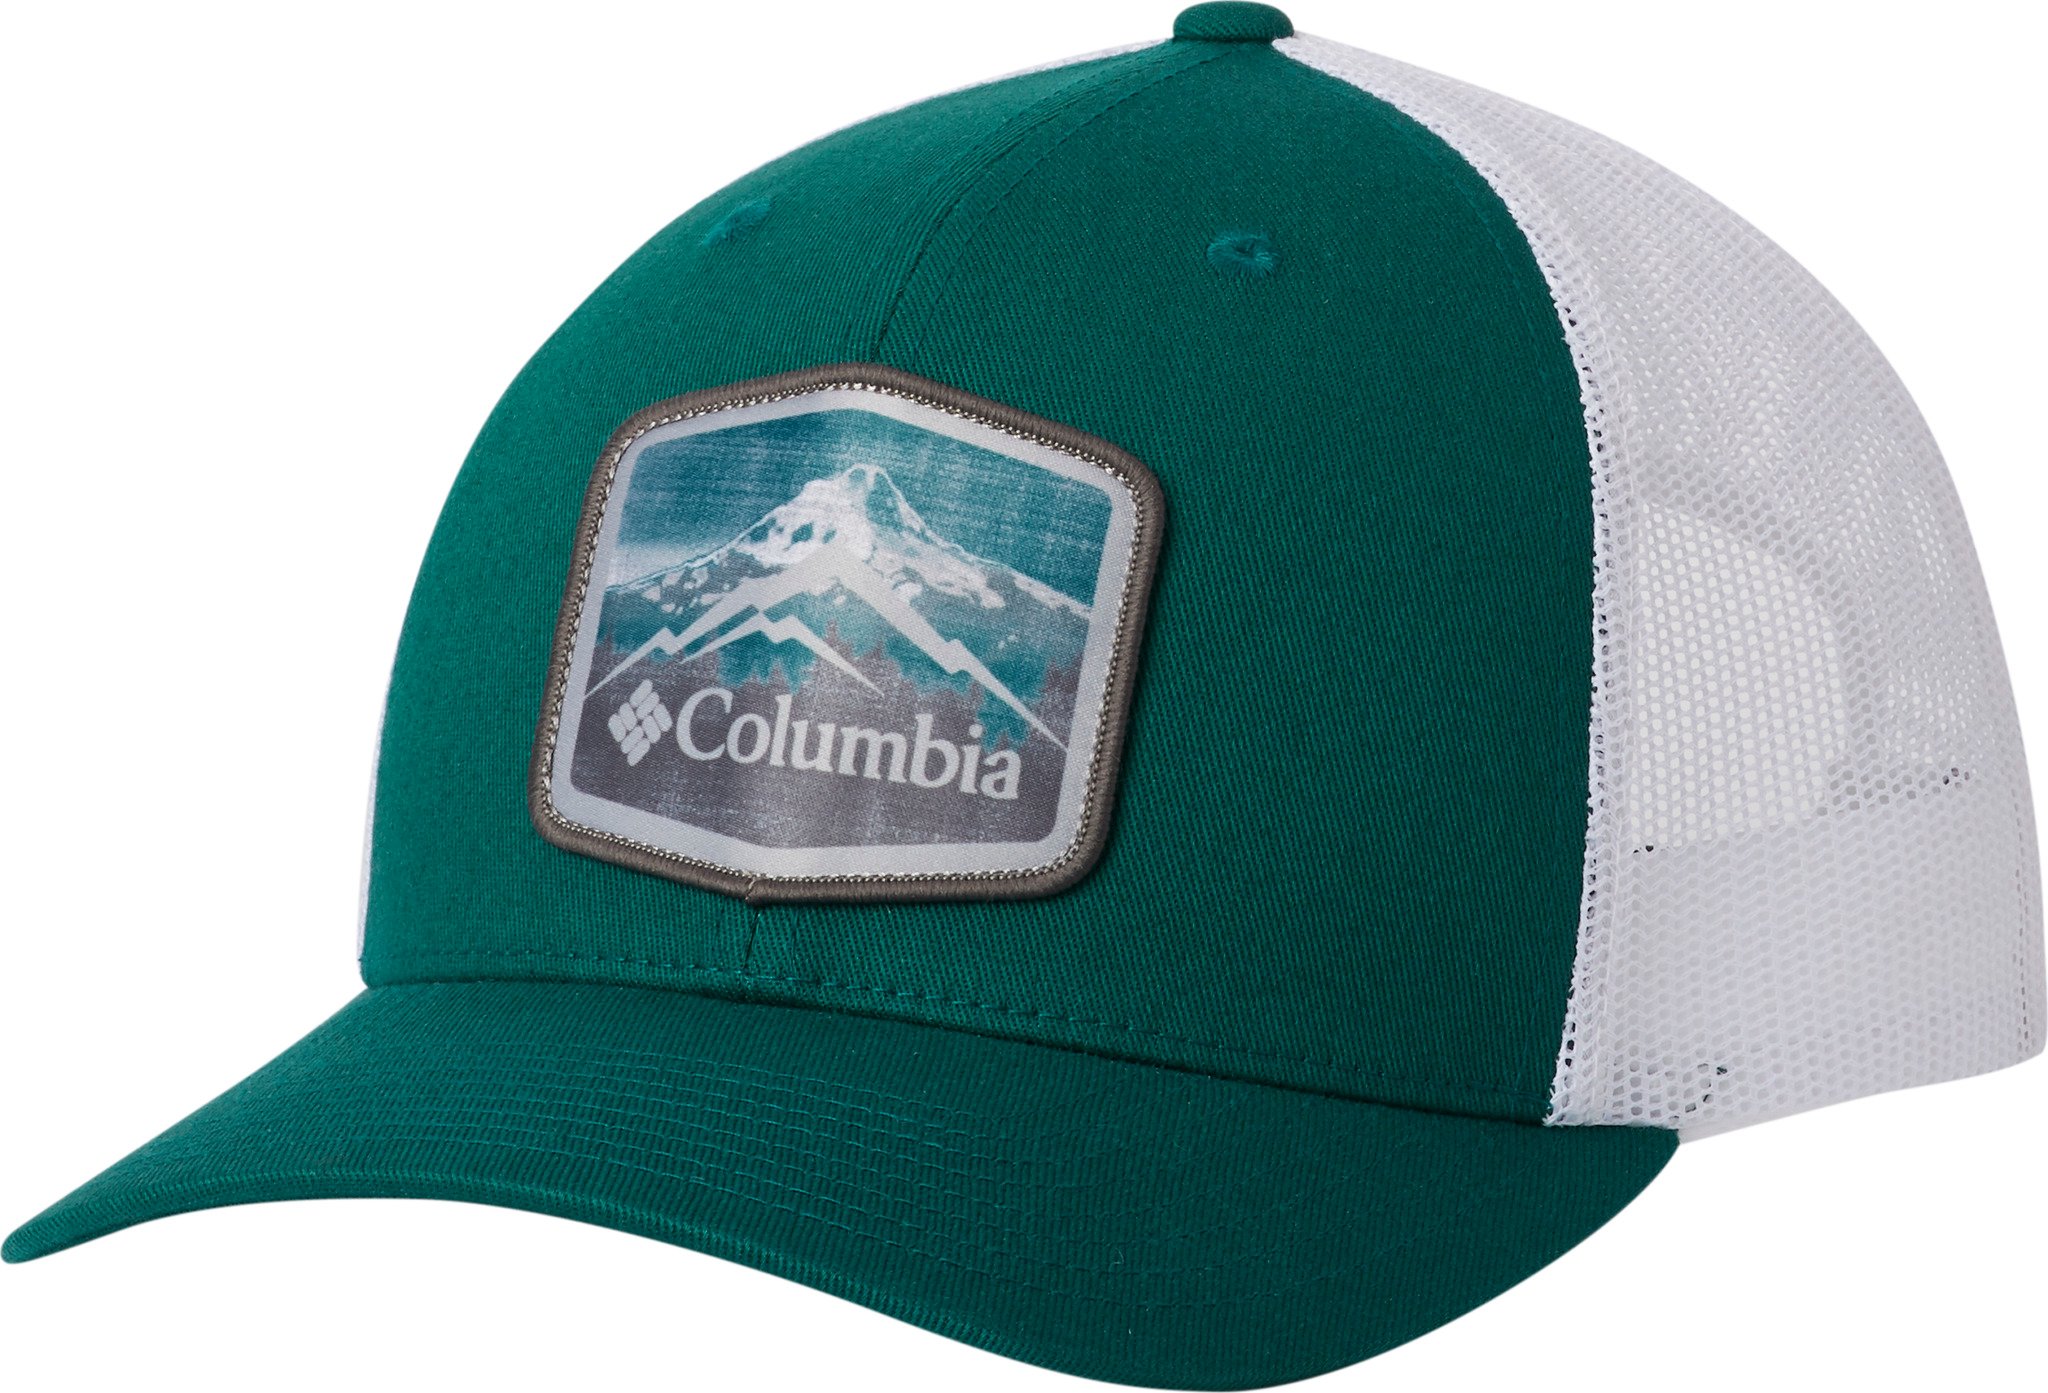 Columbia Columbia Mesh Snap Back Ball Cap - Men's